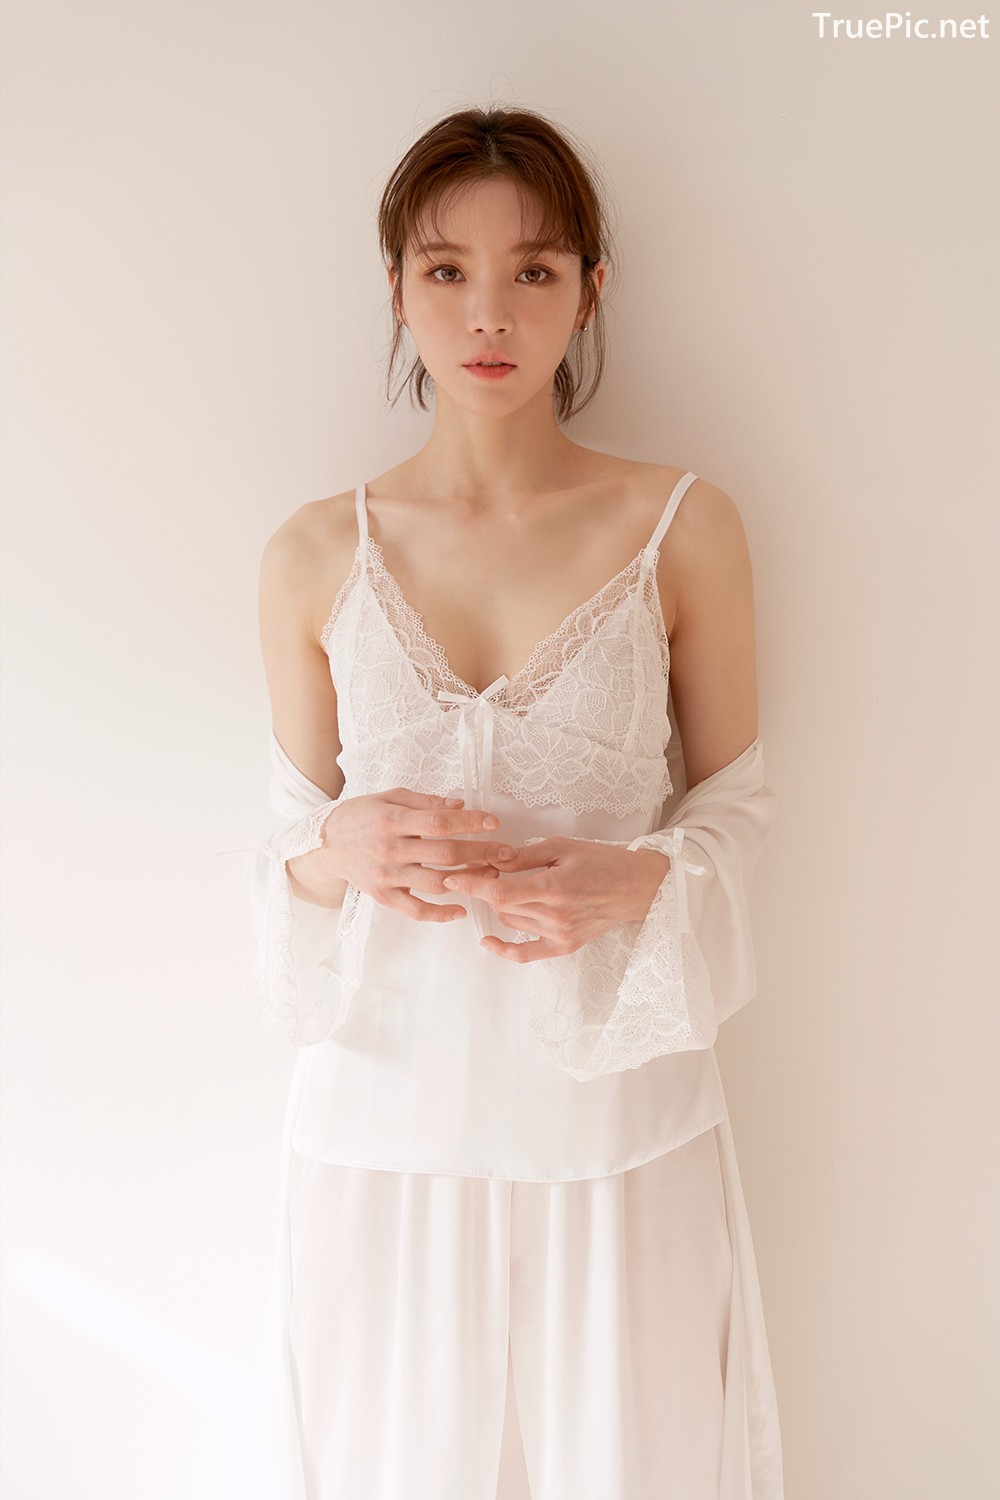 Image Korean Fashion Model Lee Ho Sin - Lingerie Wedding Pure - TruePic.net - Picture-91